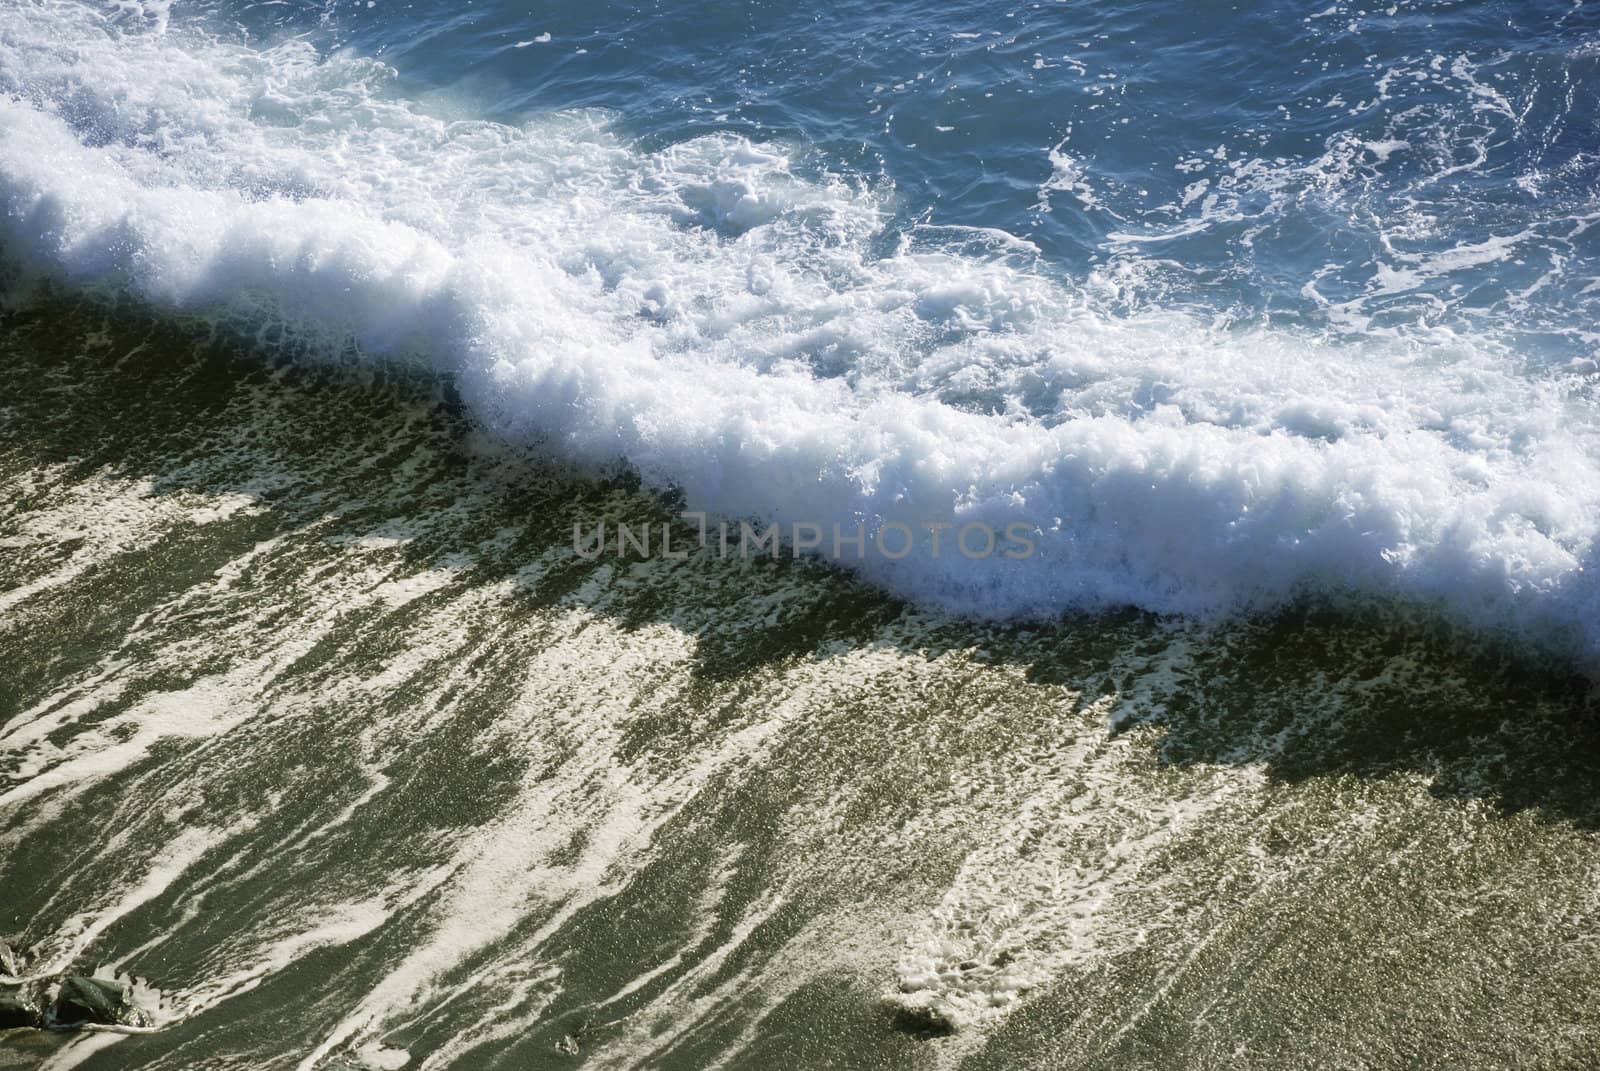 Ocean wave by whitechild